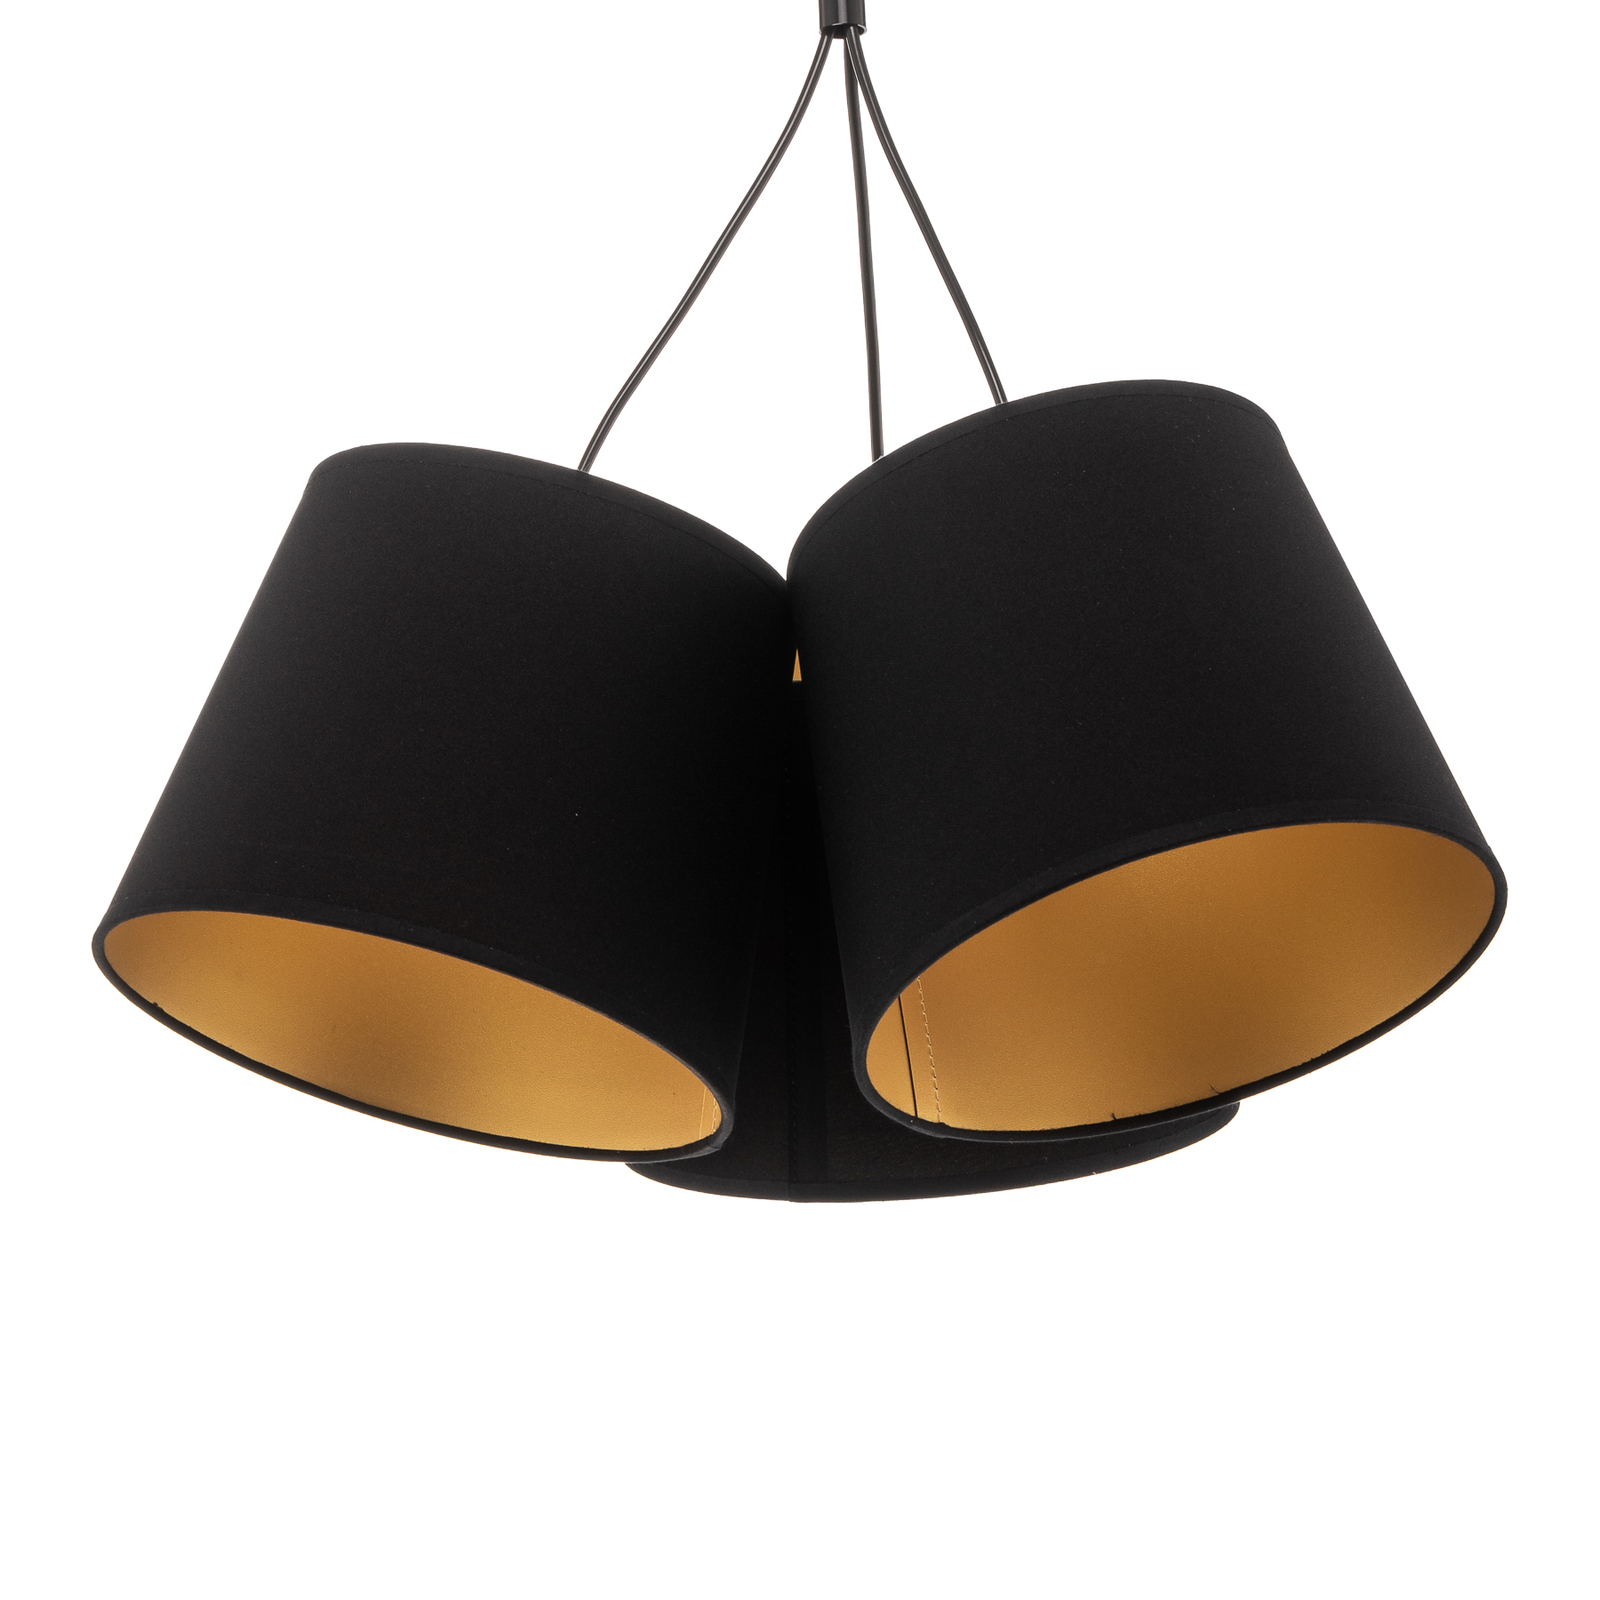 Twiggy hanging light, 3-bulb, black